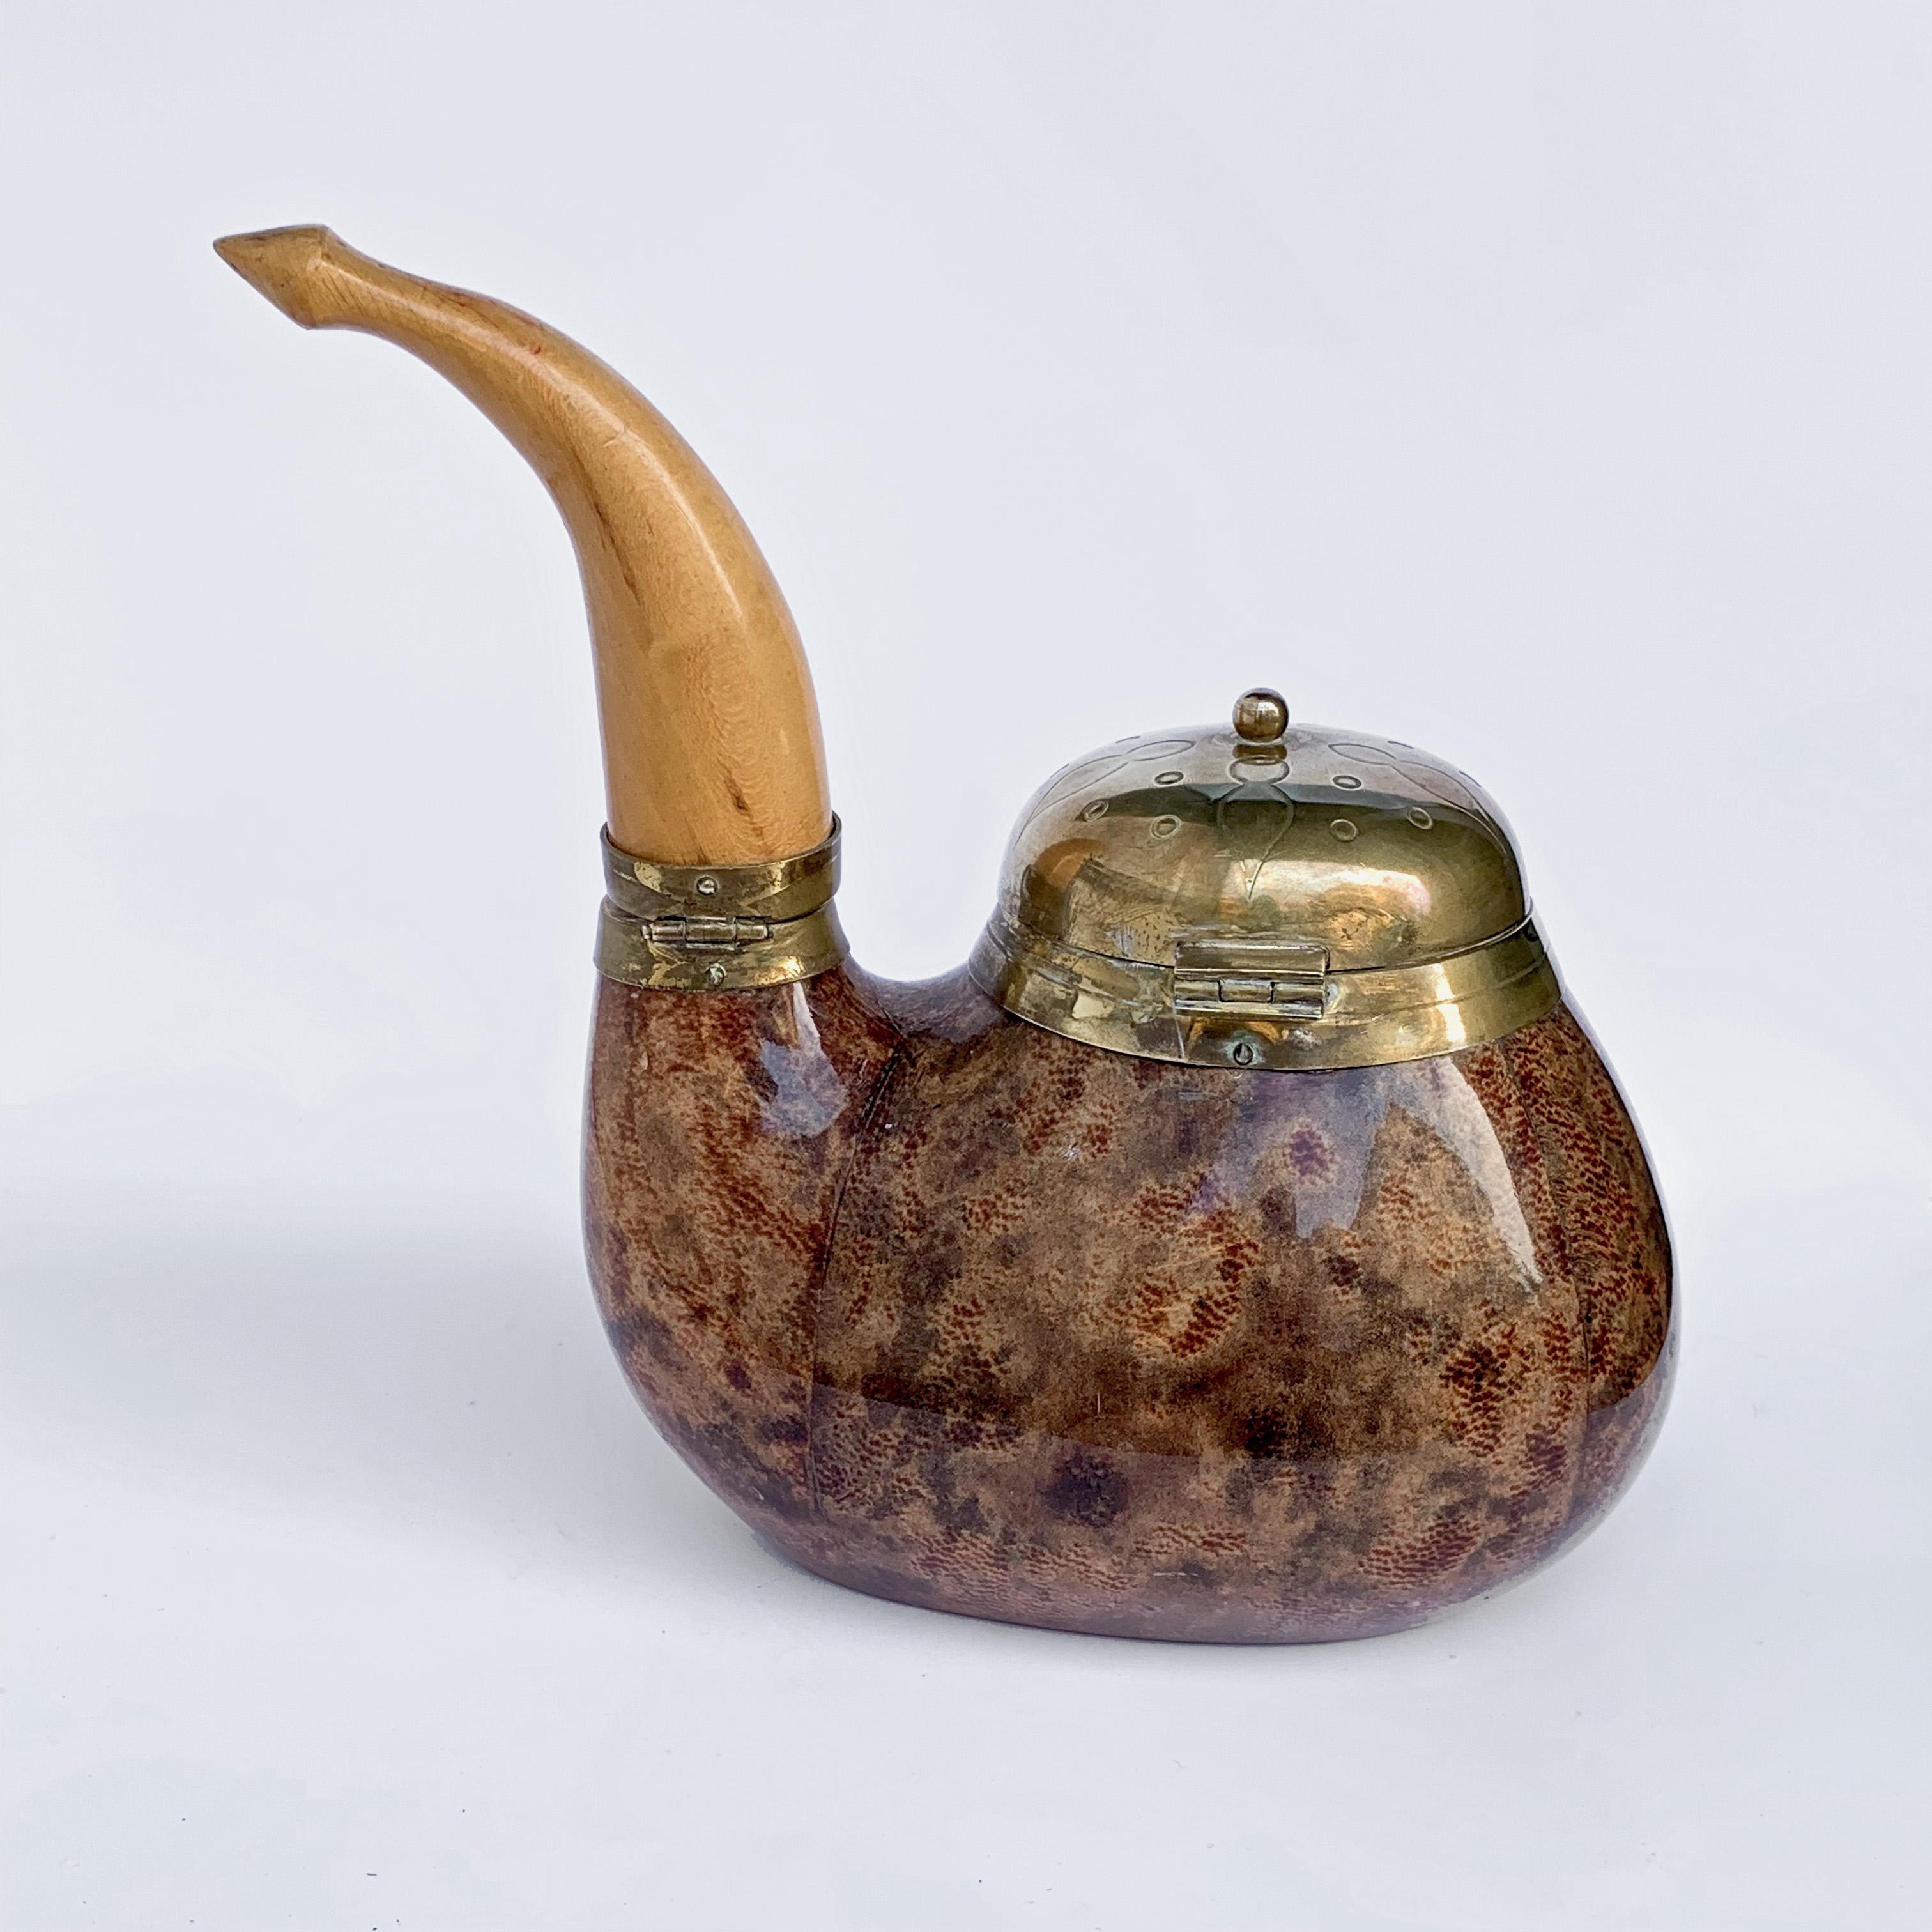 Aldo Tura Goat Skin, Brass and Wood Italian Pipe Shaped Tobacco Box, 1940s For Sale 1